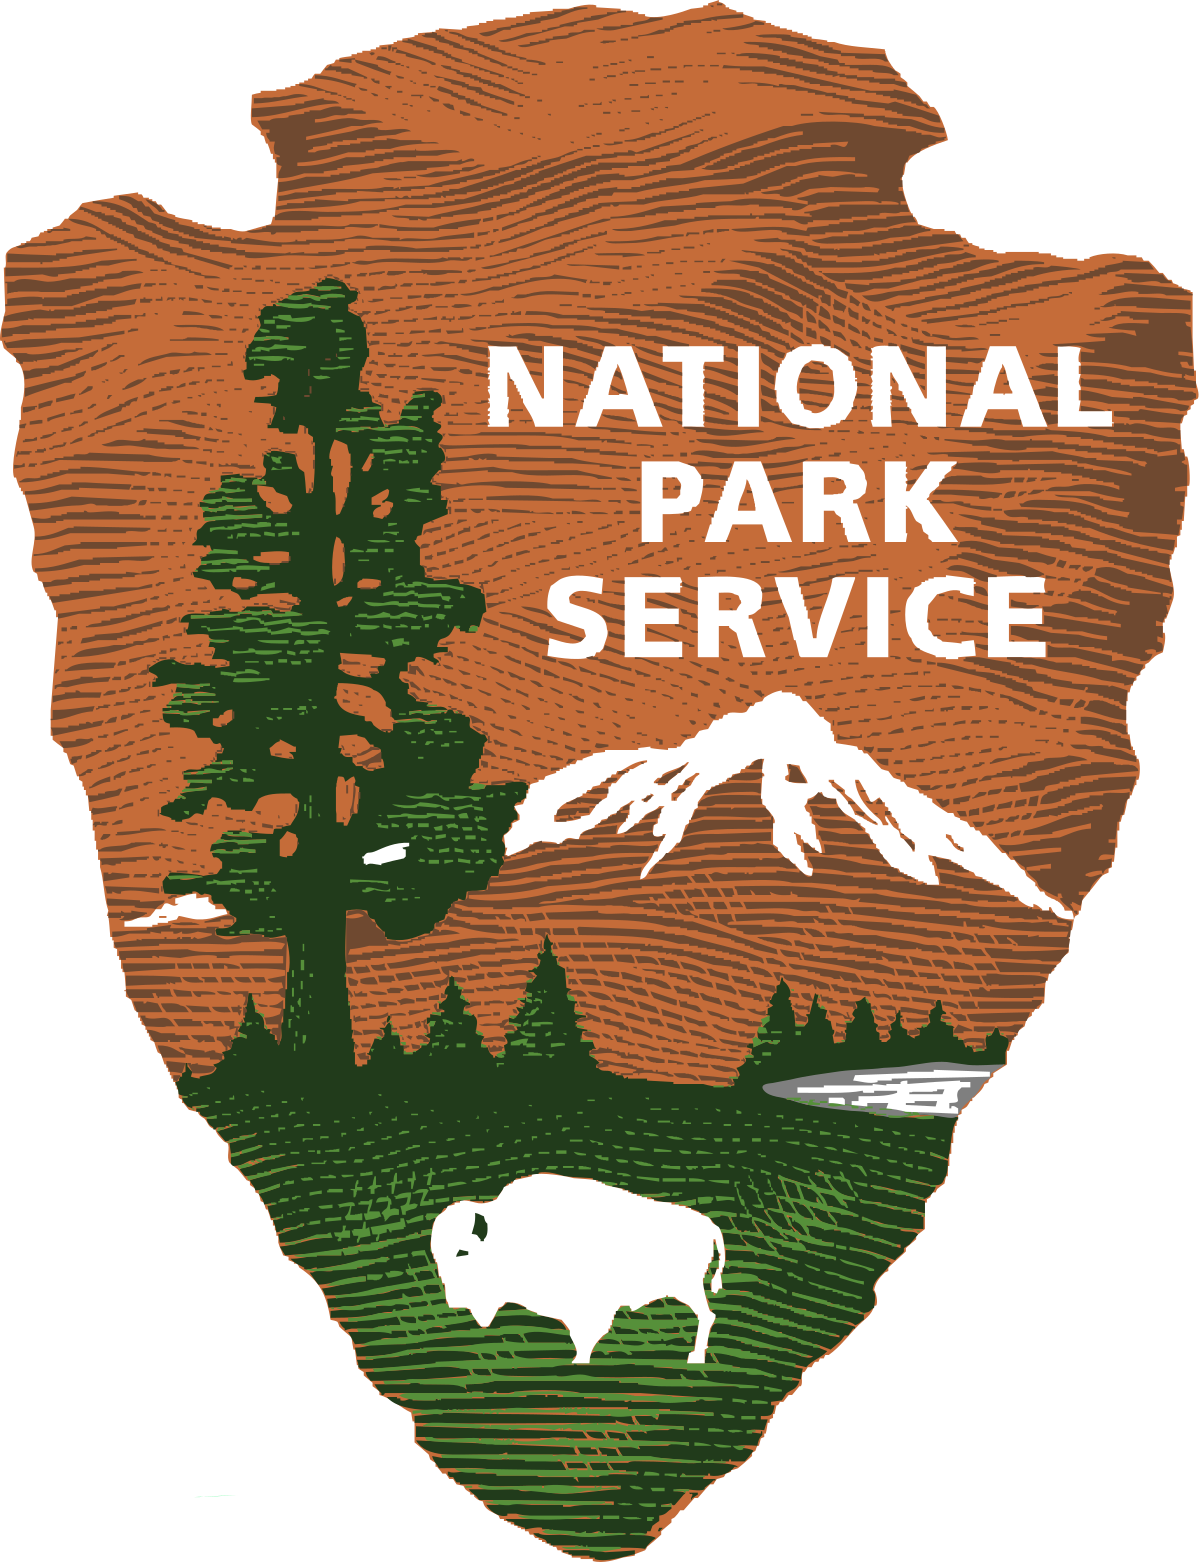 National Park Service - Wikipedia